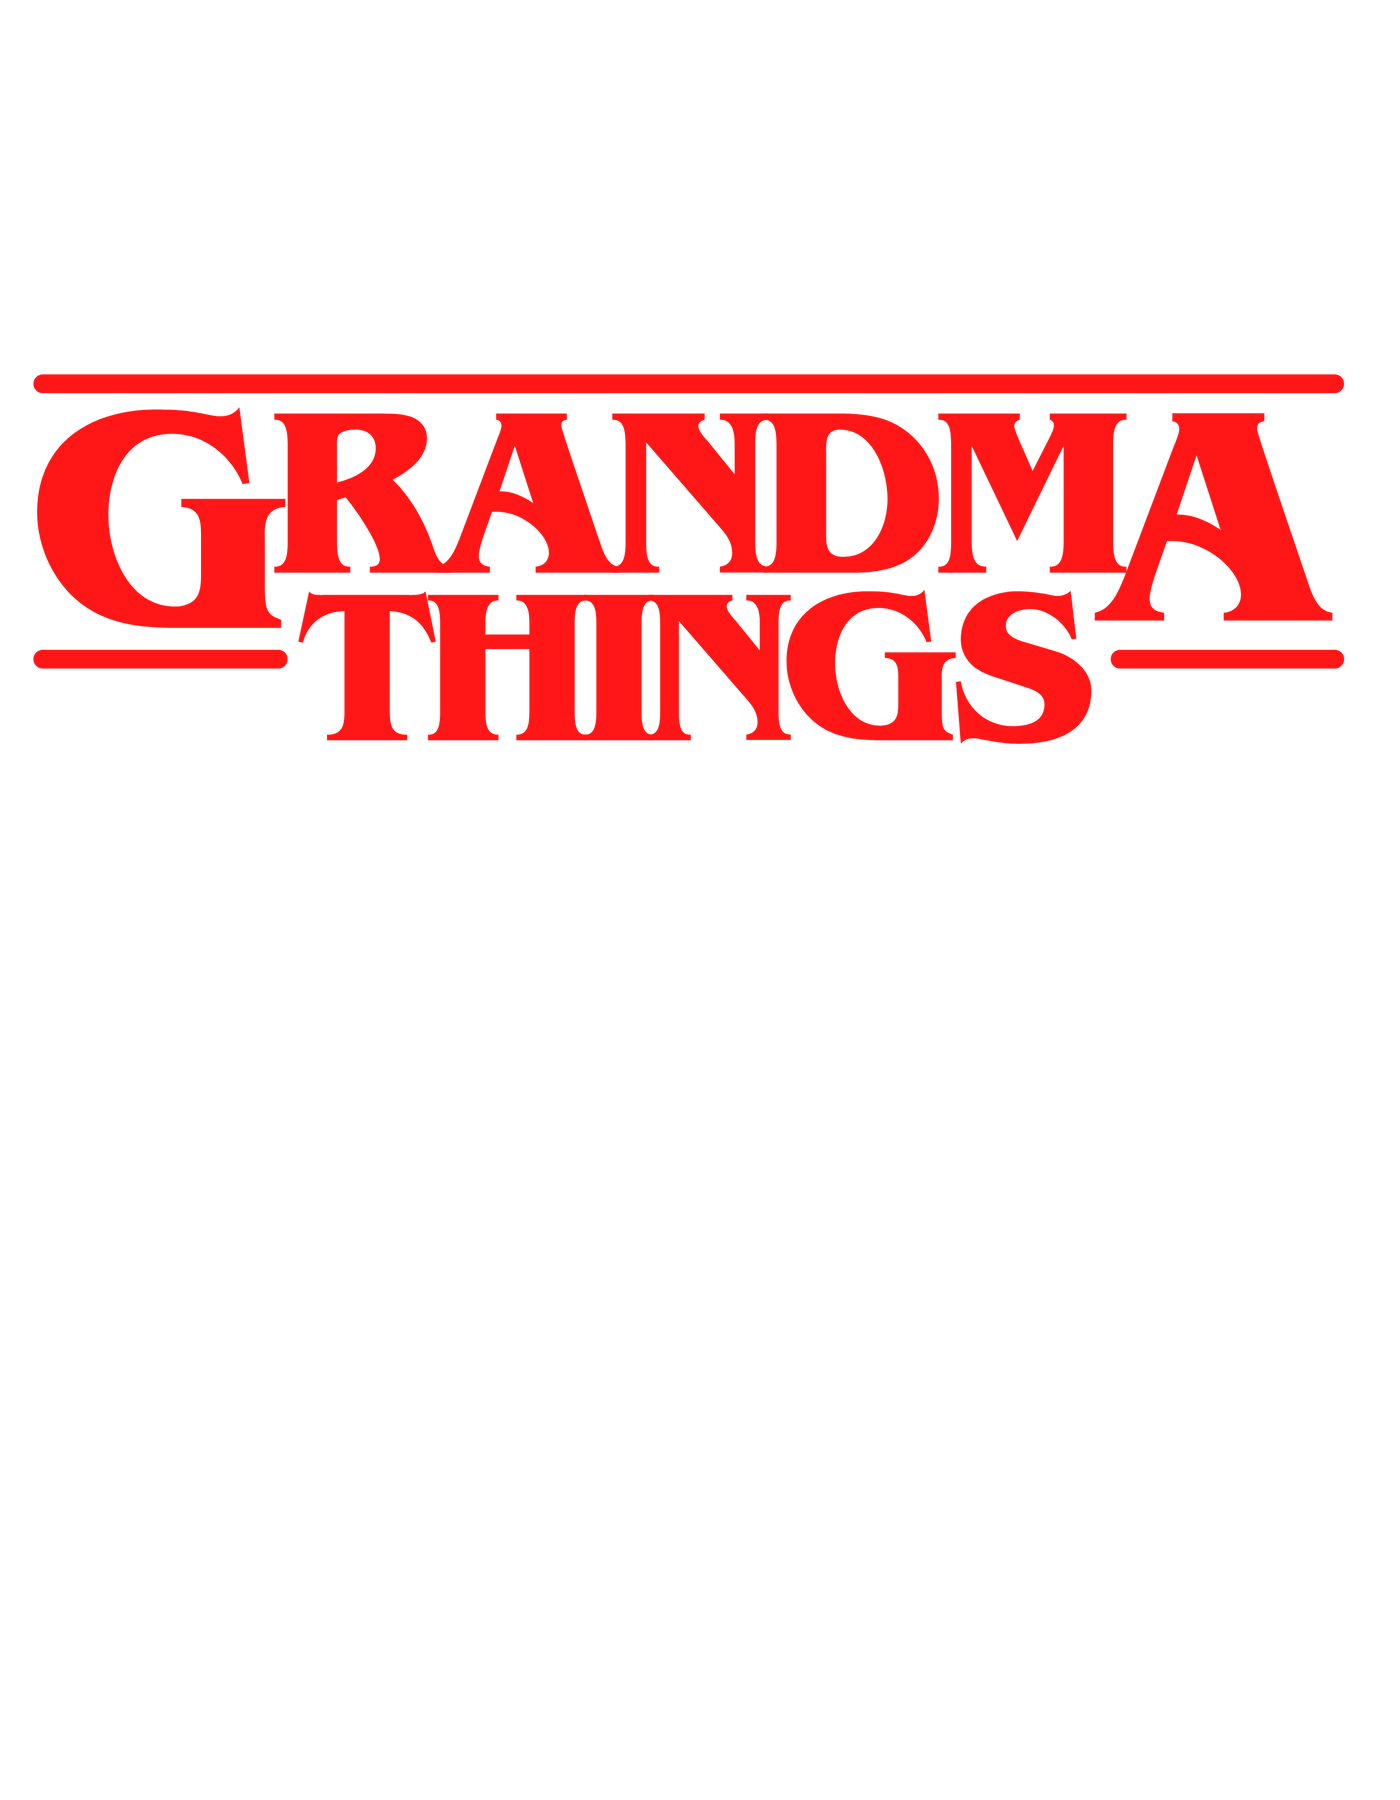 GRANDMA THINGS